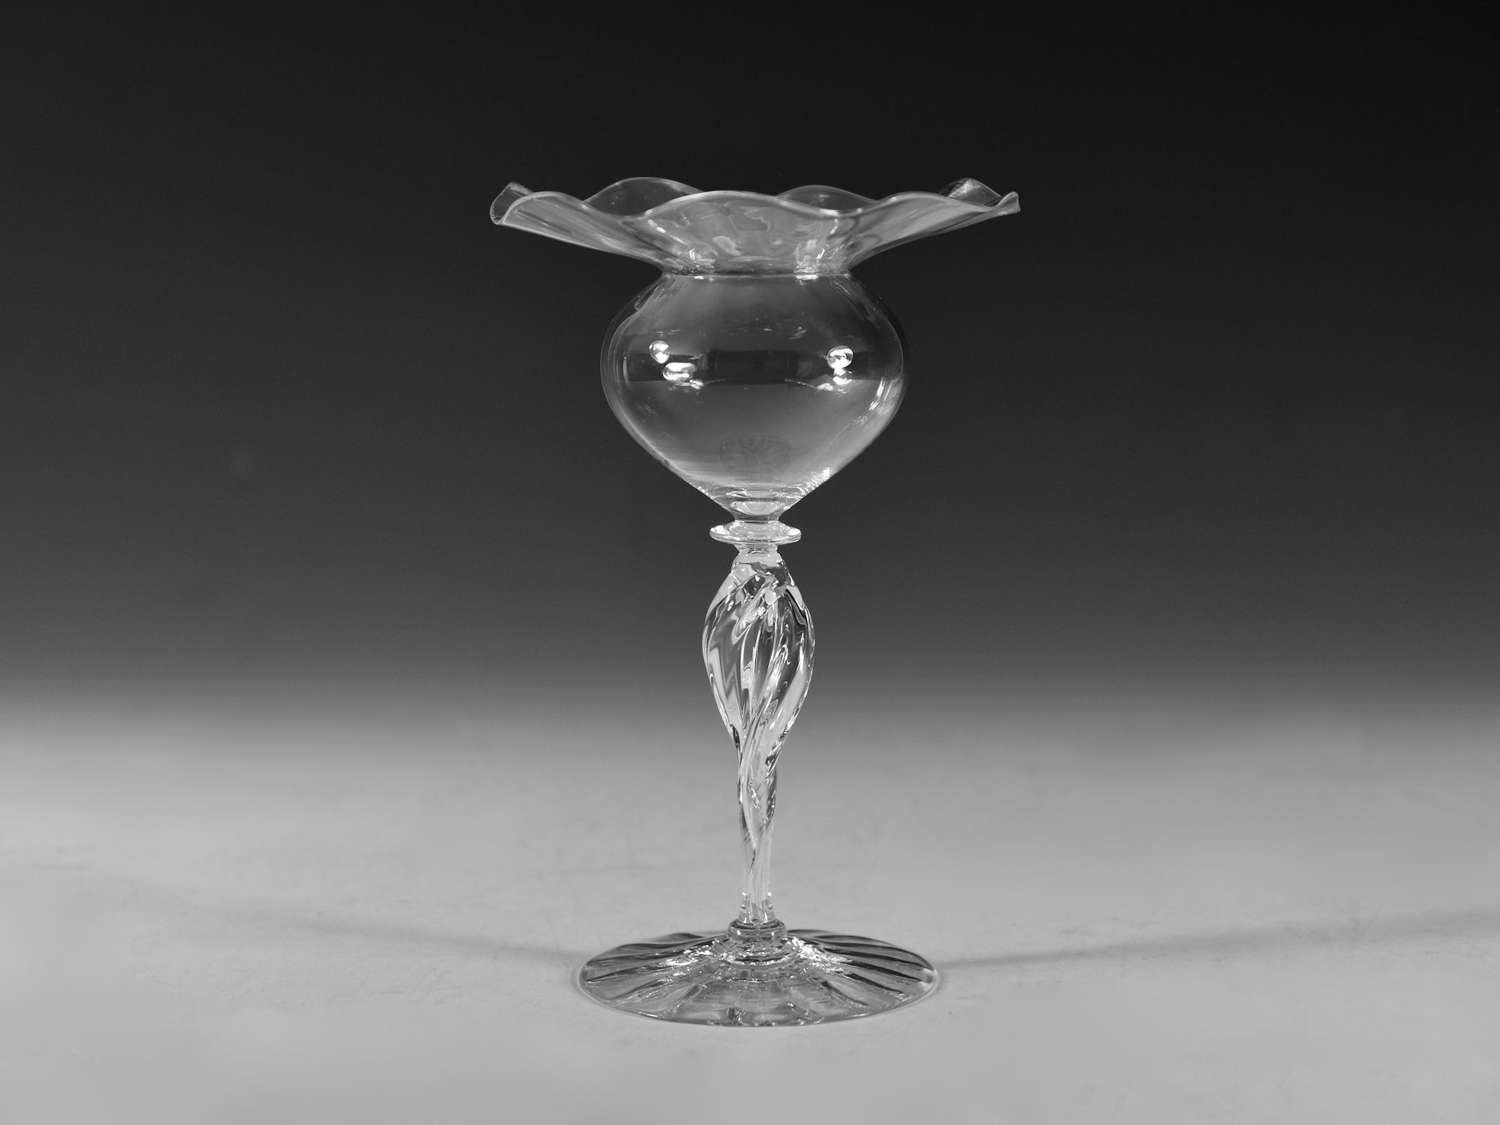 Antique glass Venetian inspired vase by Harry Powell c1880